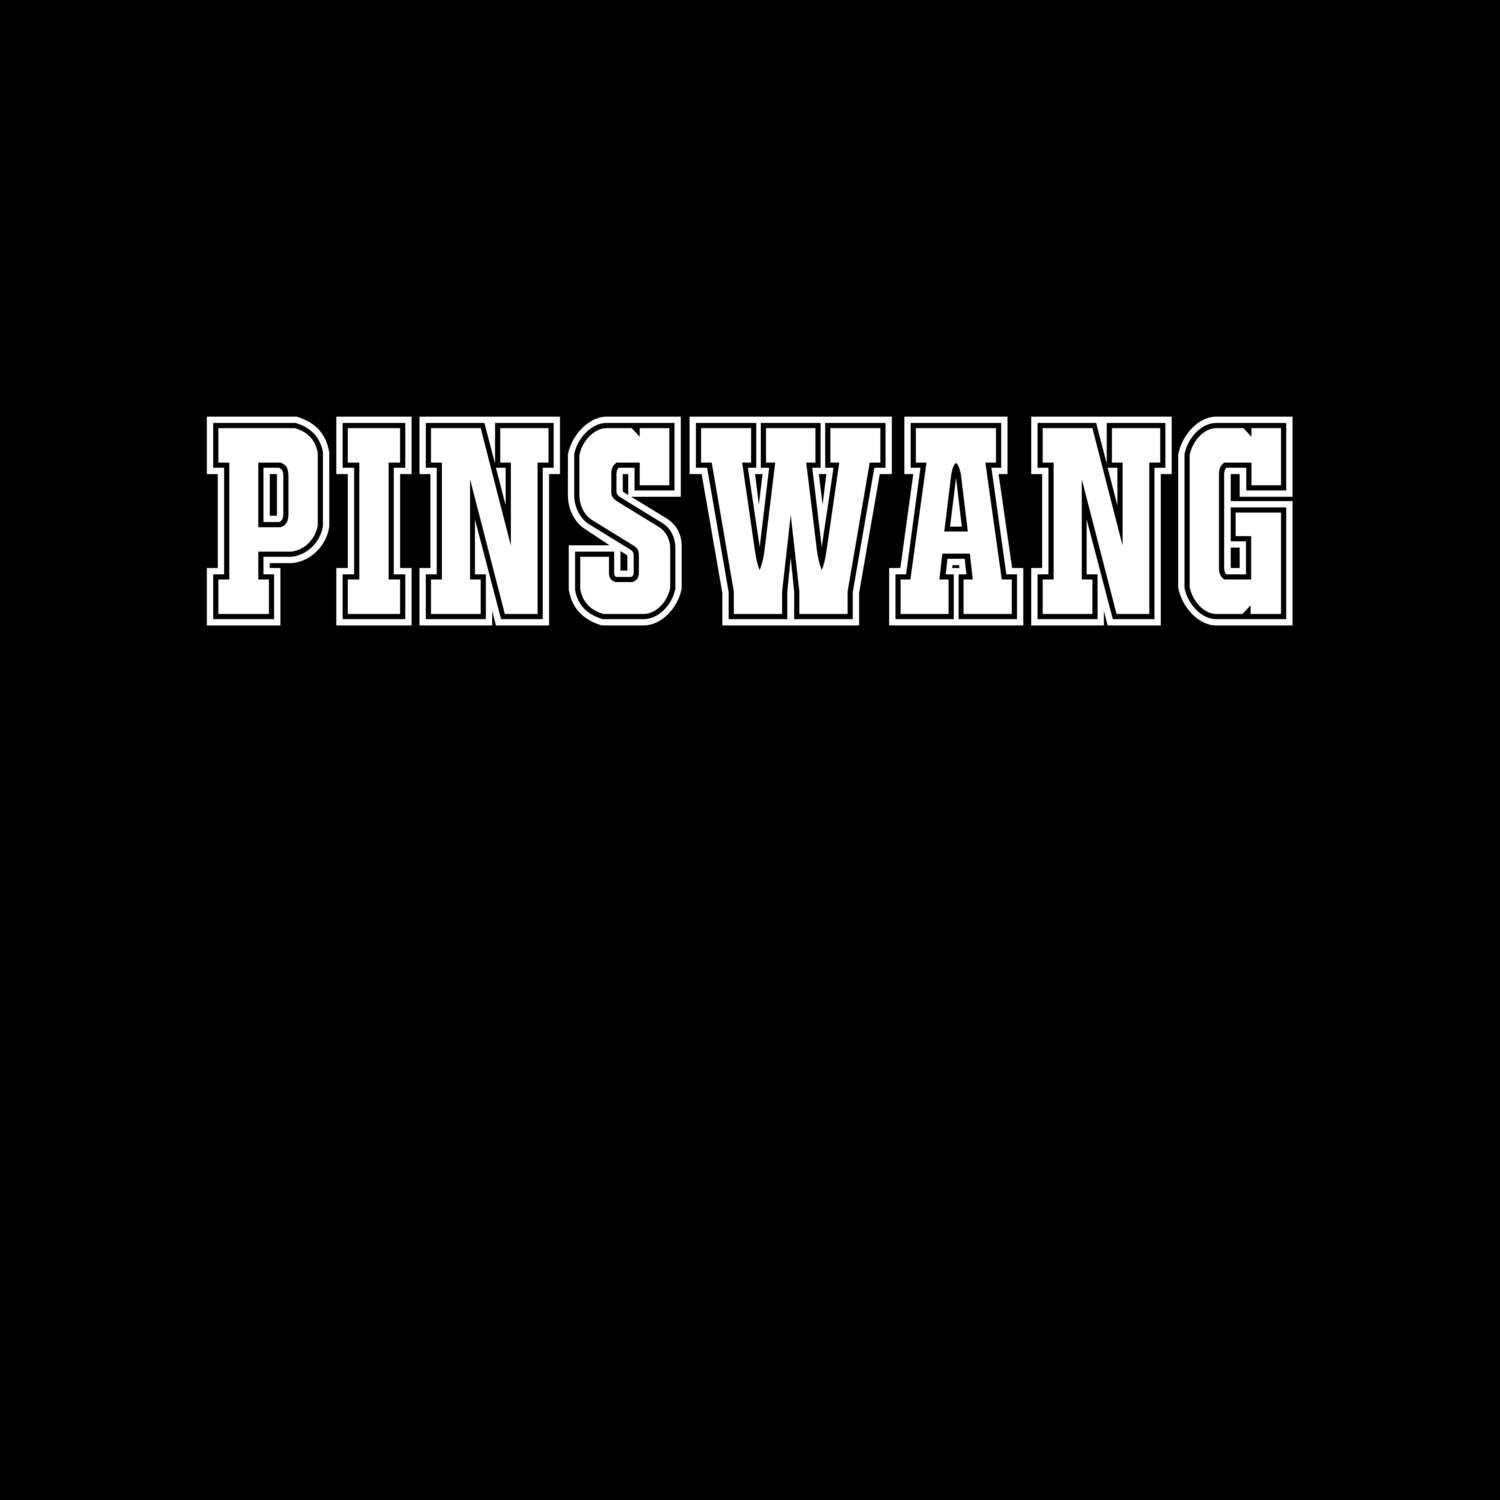 Pinswang T-Shirt »Classic«